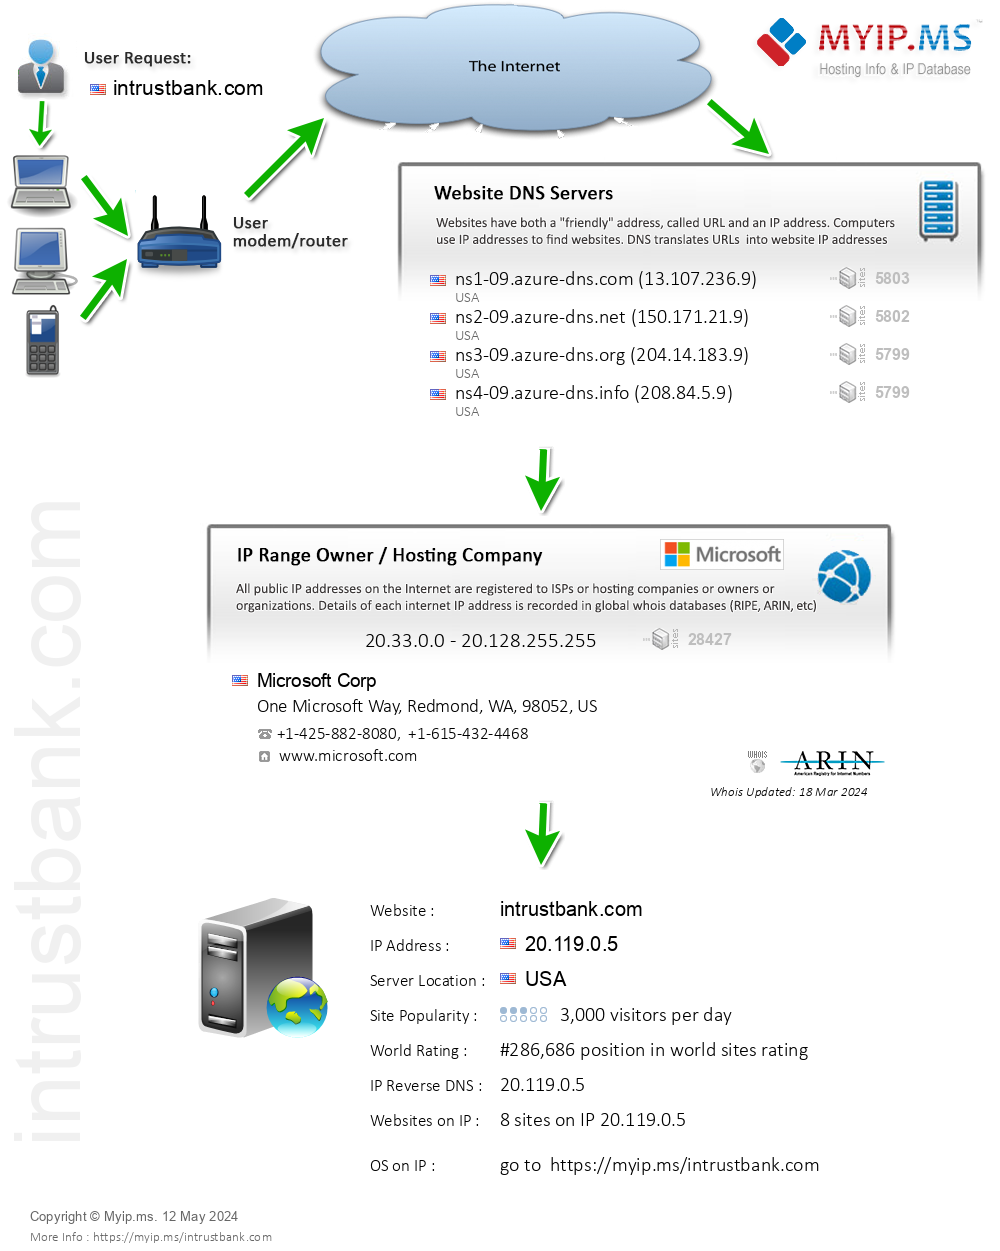 Intrustbank.com - Website Hosting Visual IP Diagram